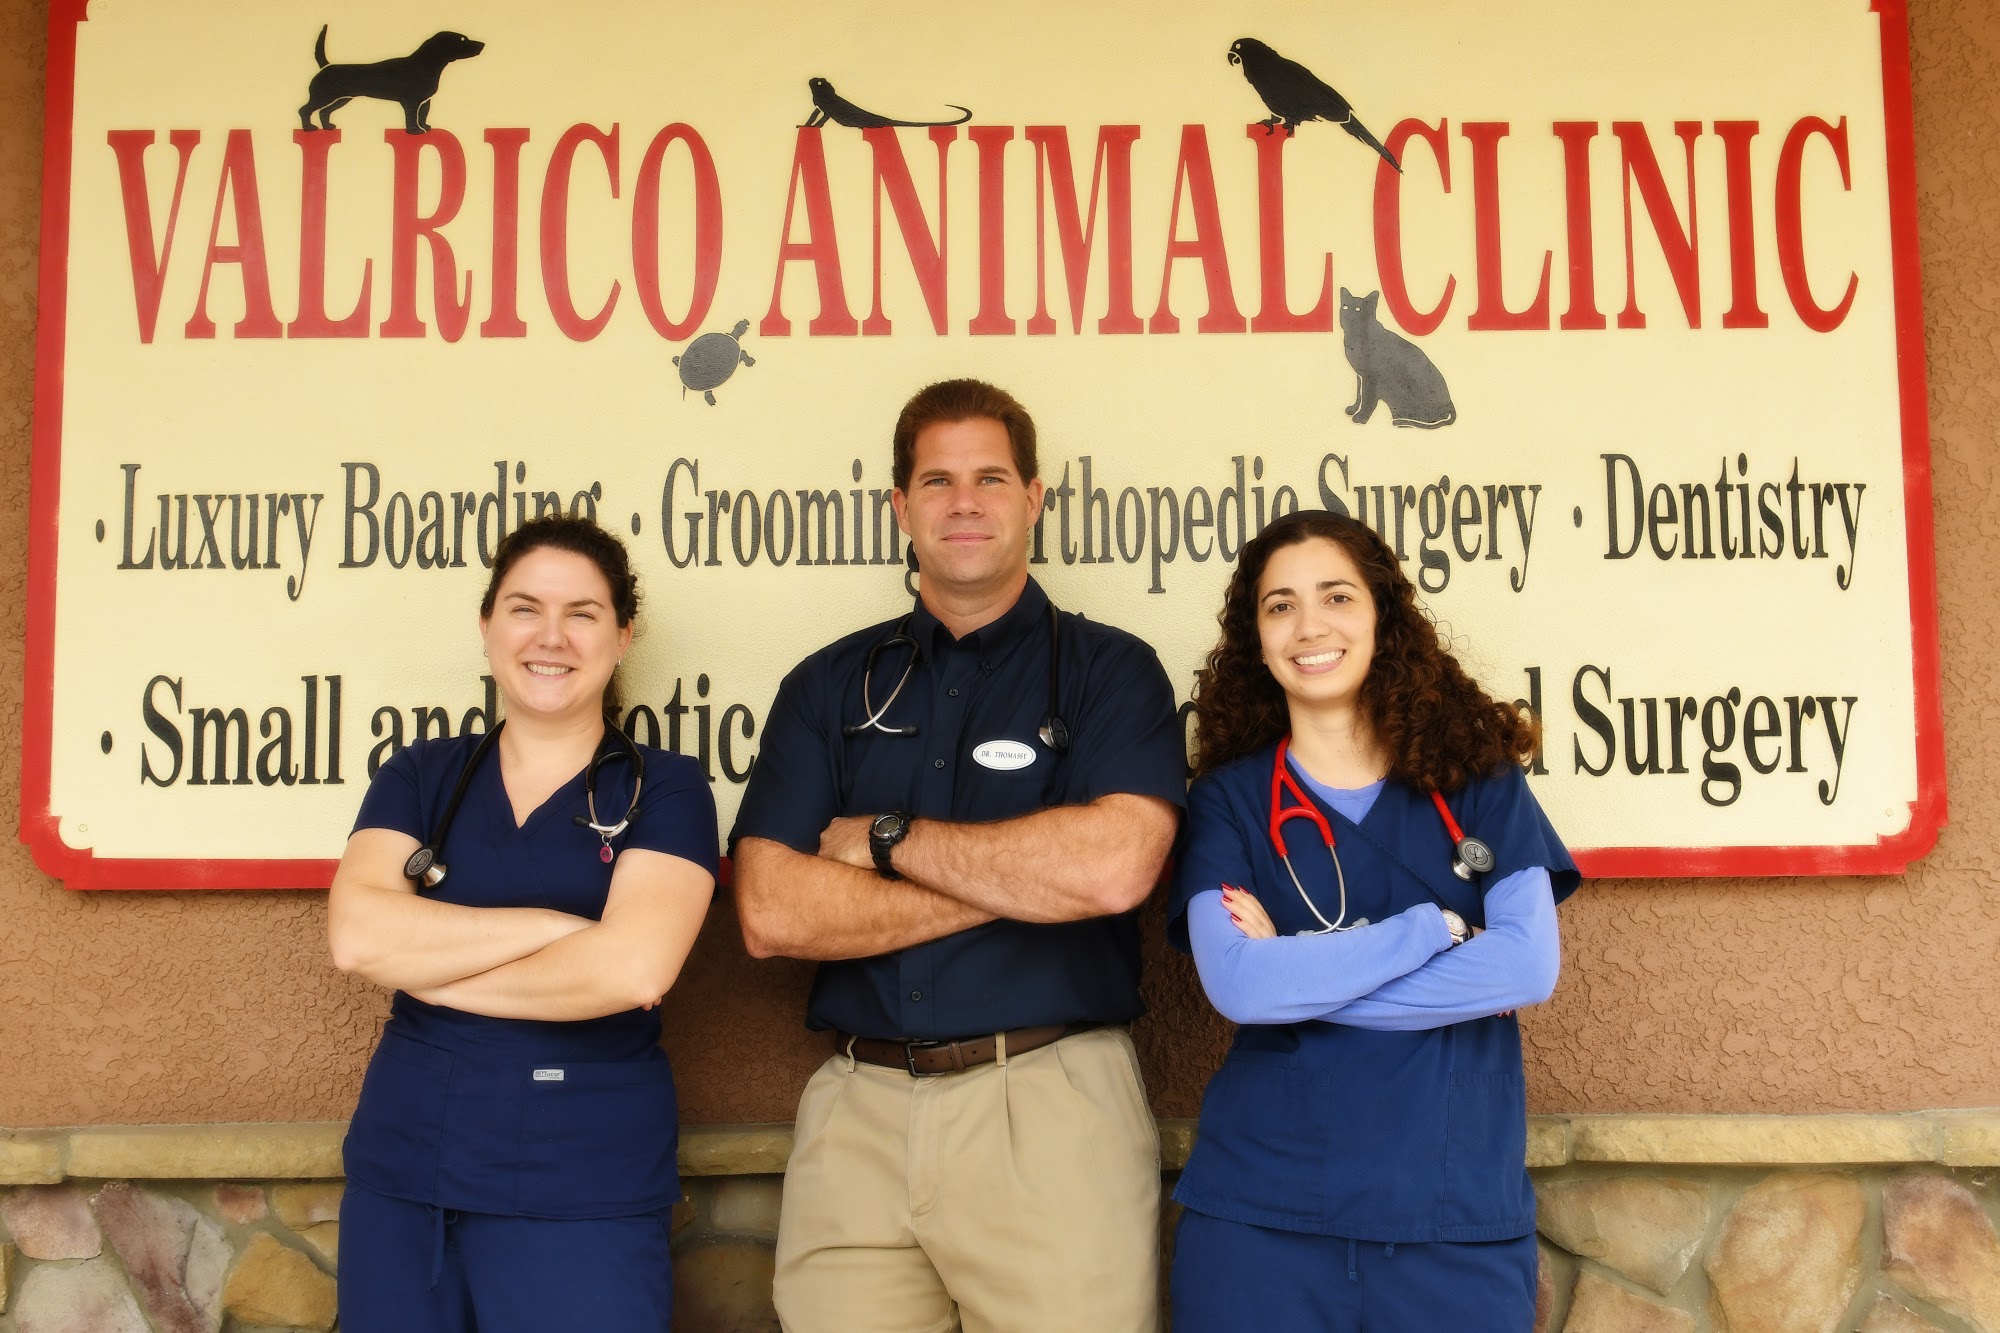 Valrico Animal Clinic